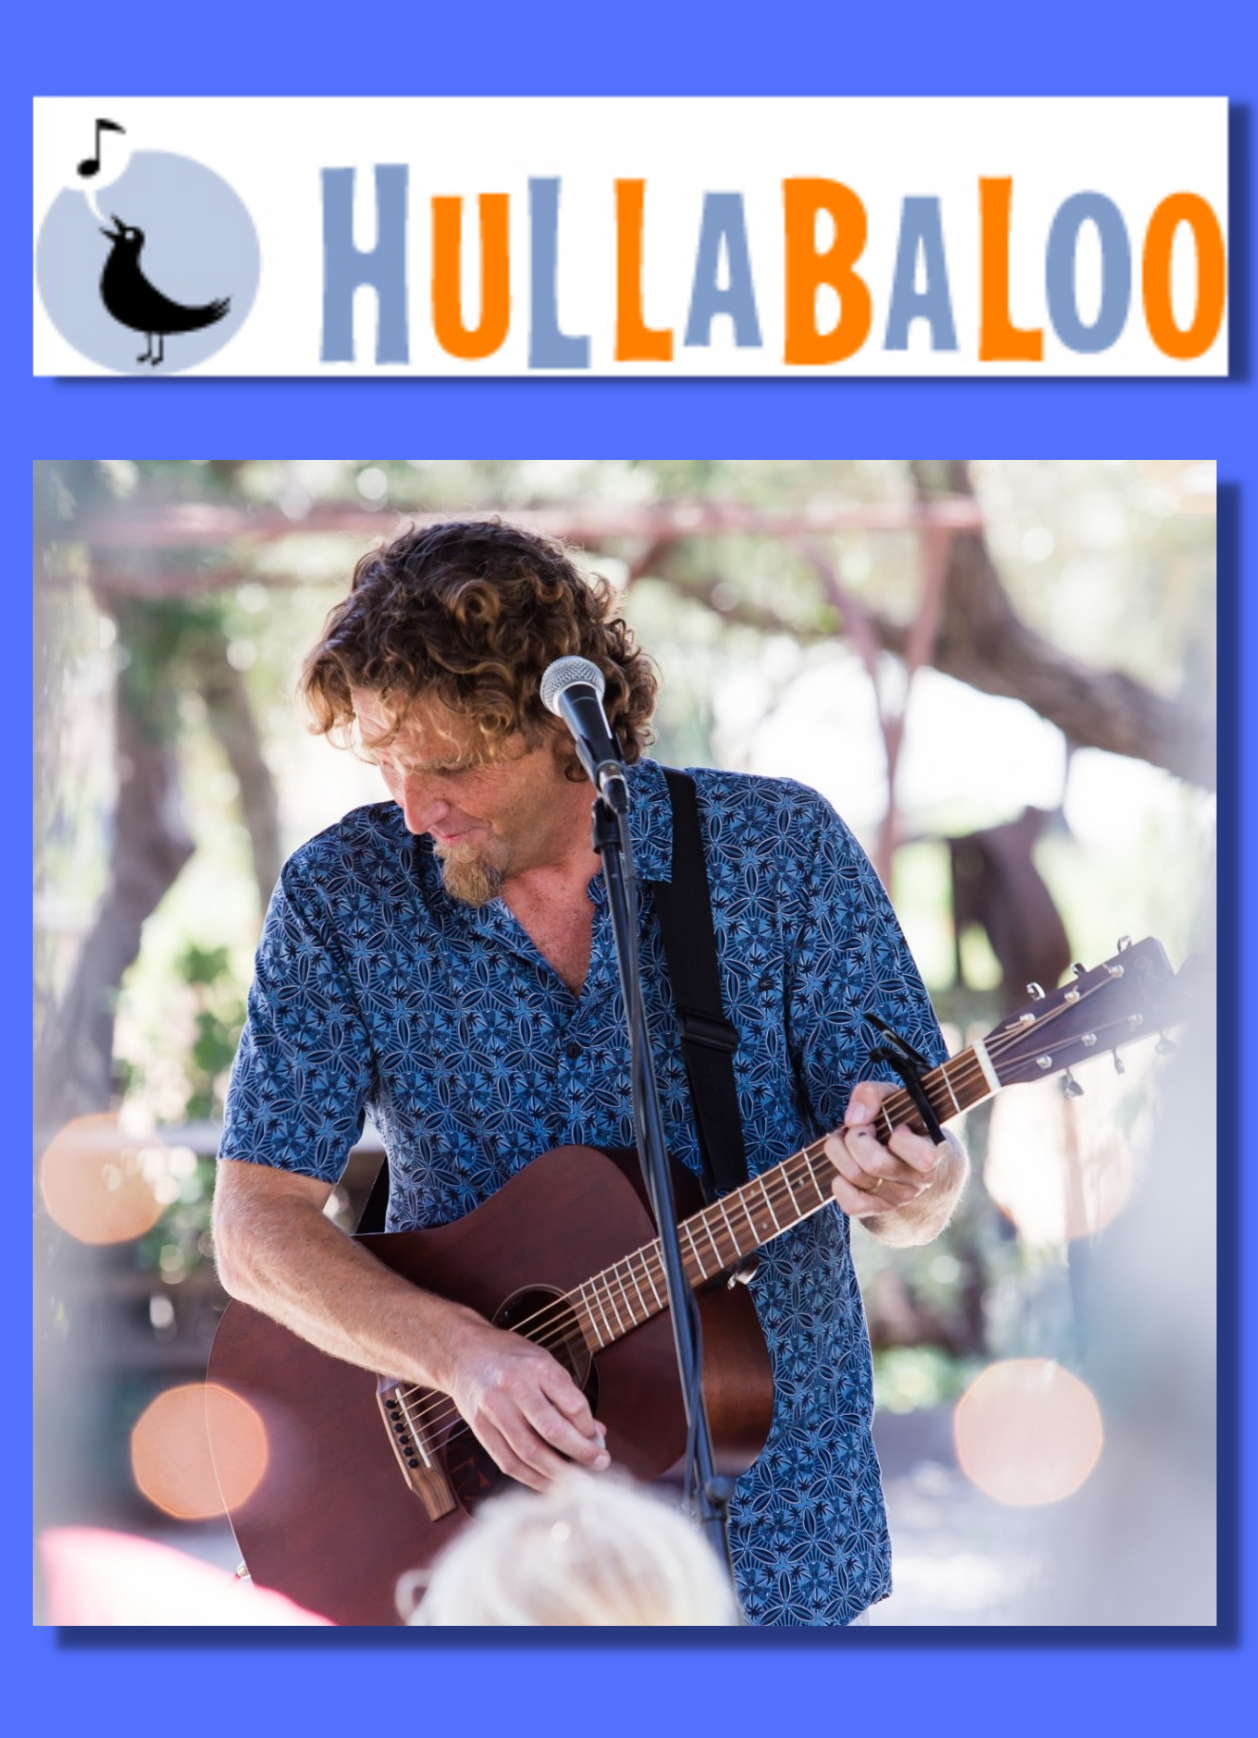 Hullabaloo logo and a man holding an acoustic guitar